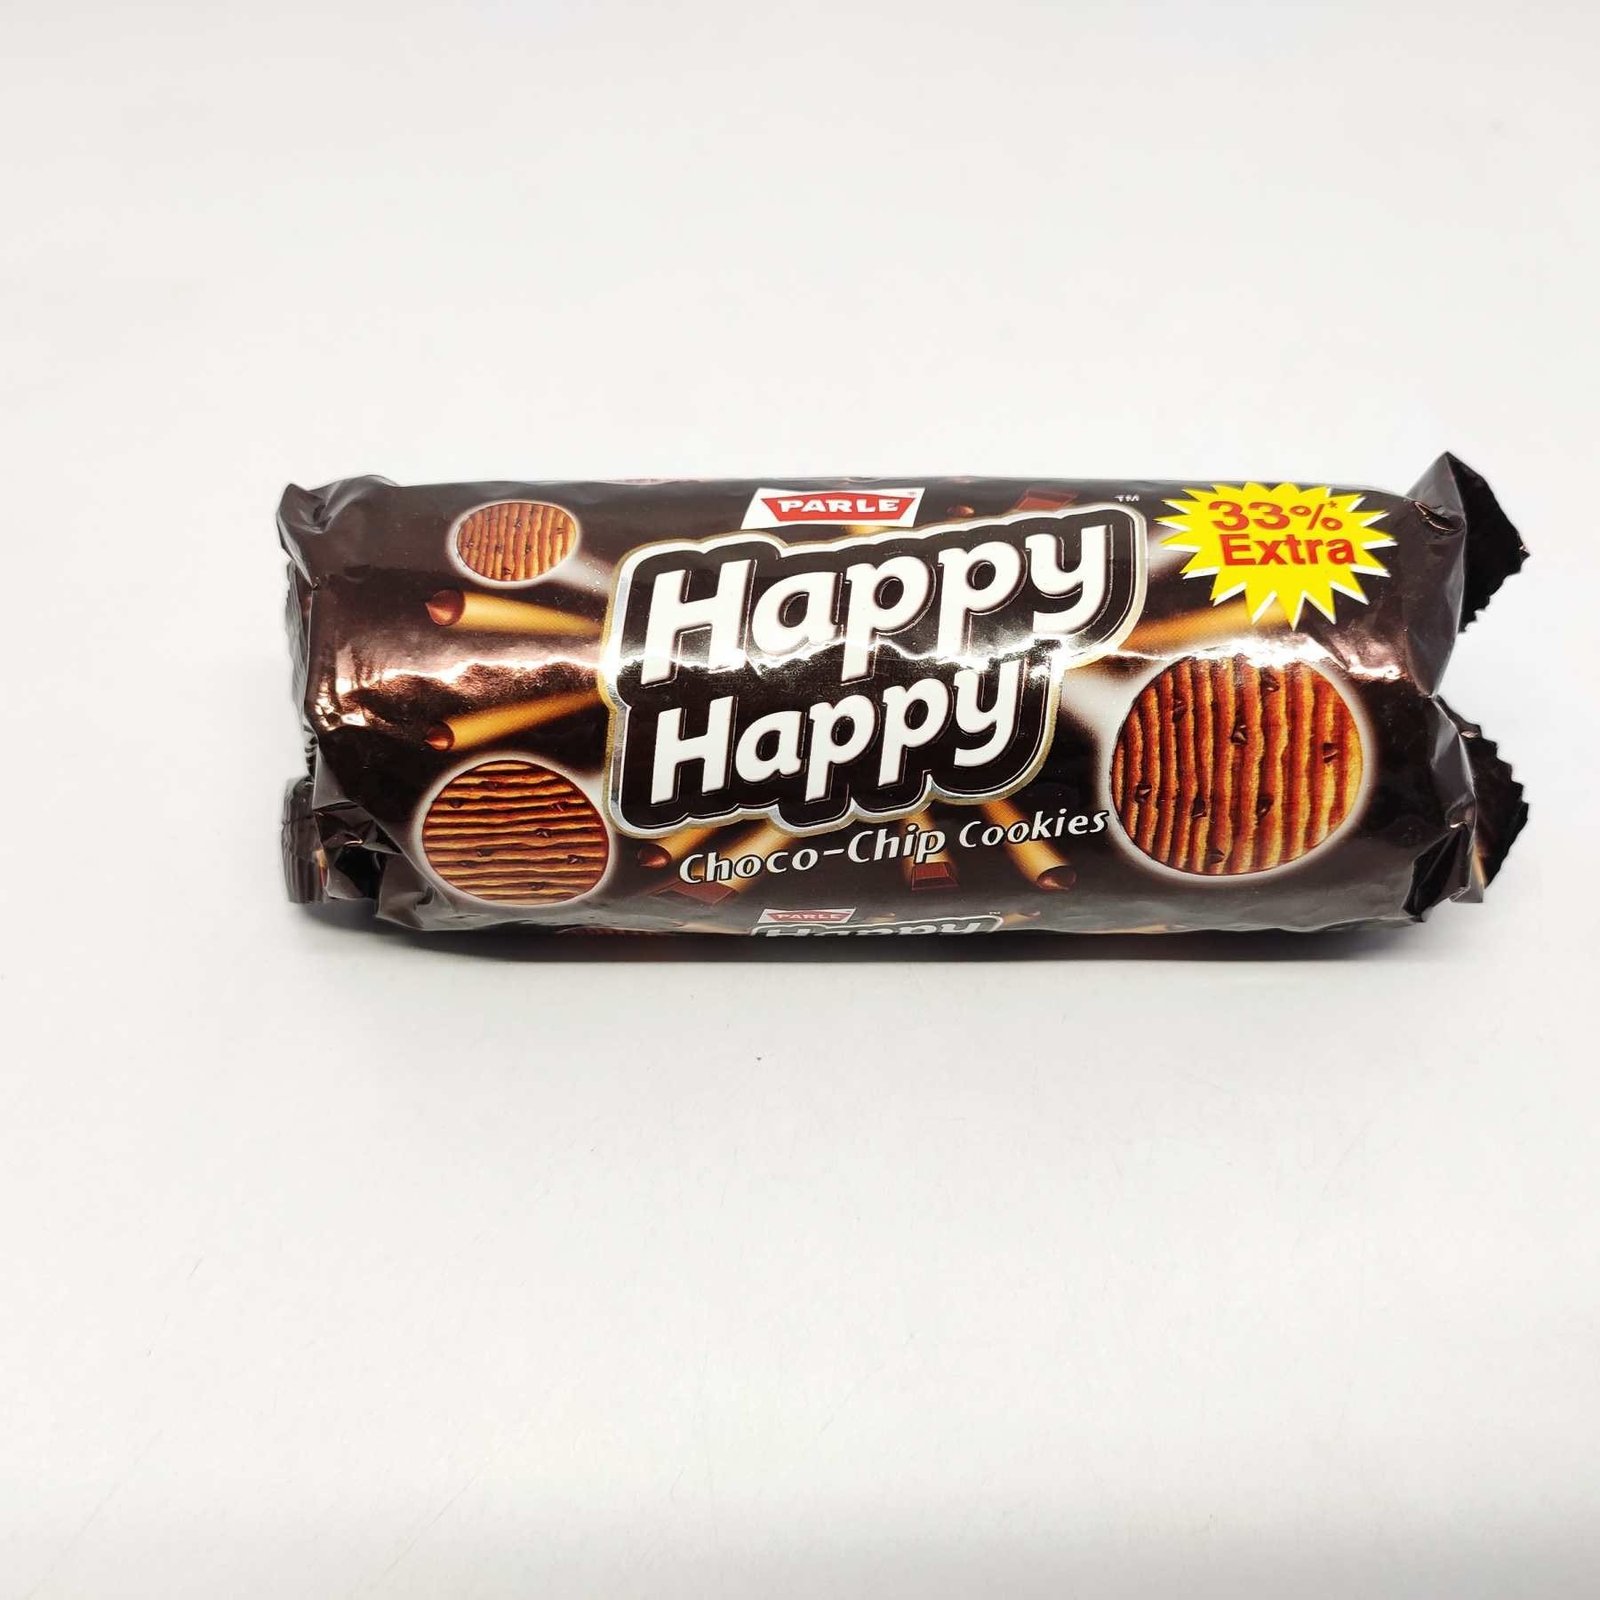 Parle Happy happy choco chip cookies, 80 grams